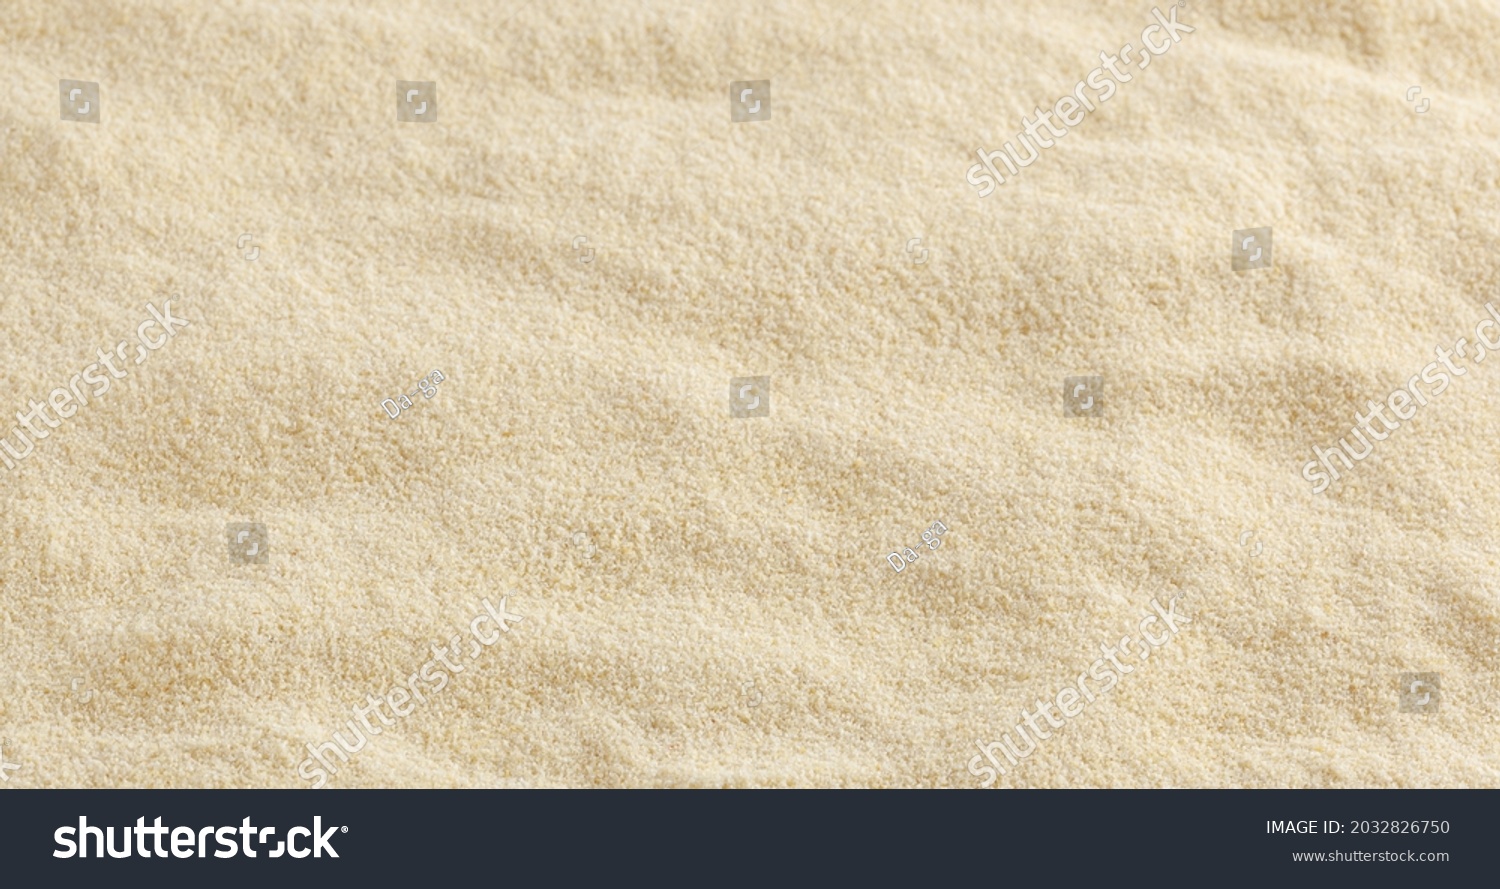 Close up of semolina flour background #2032826750